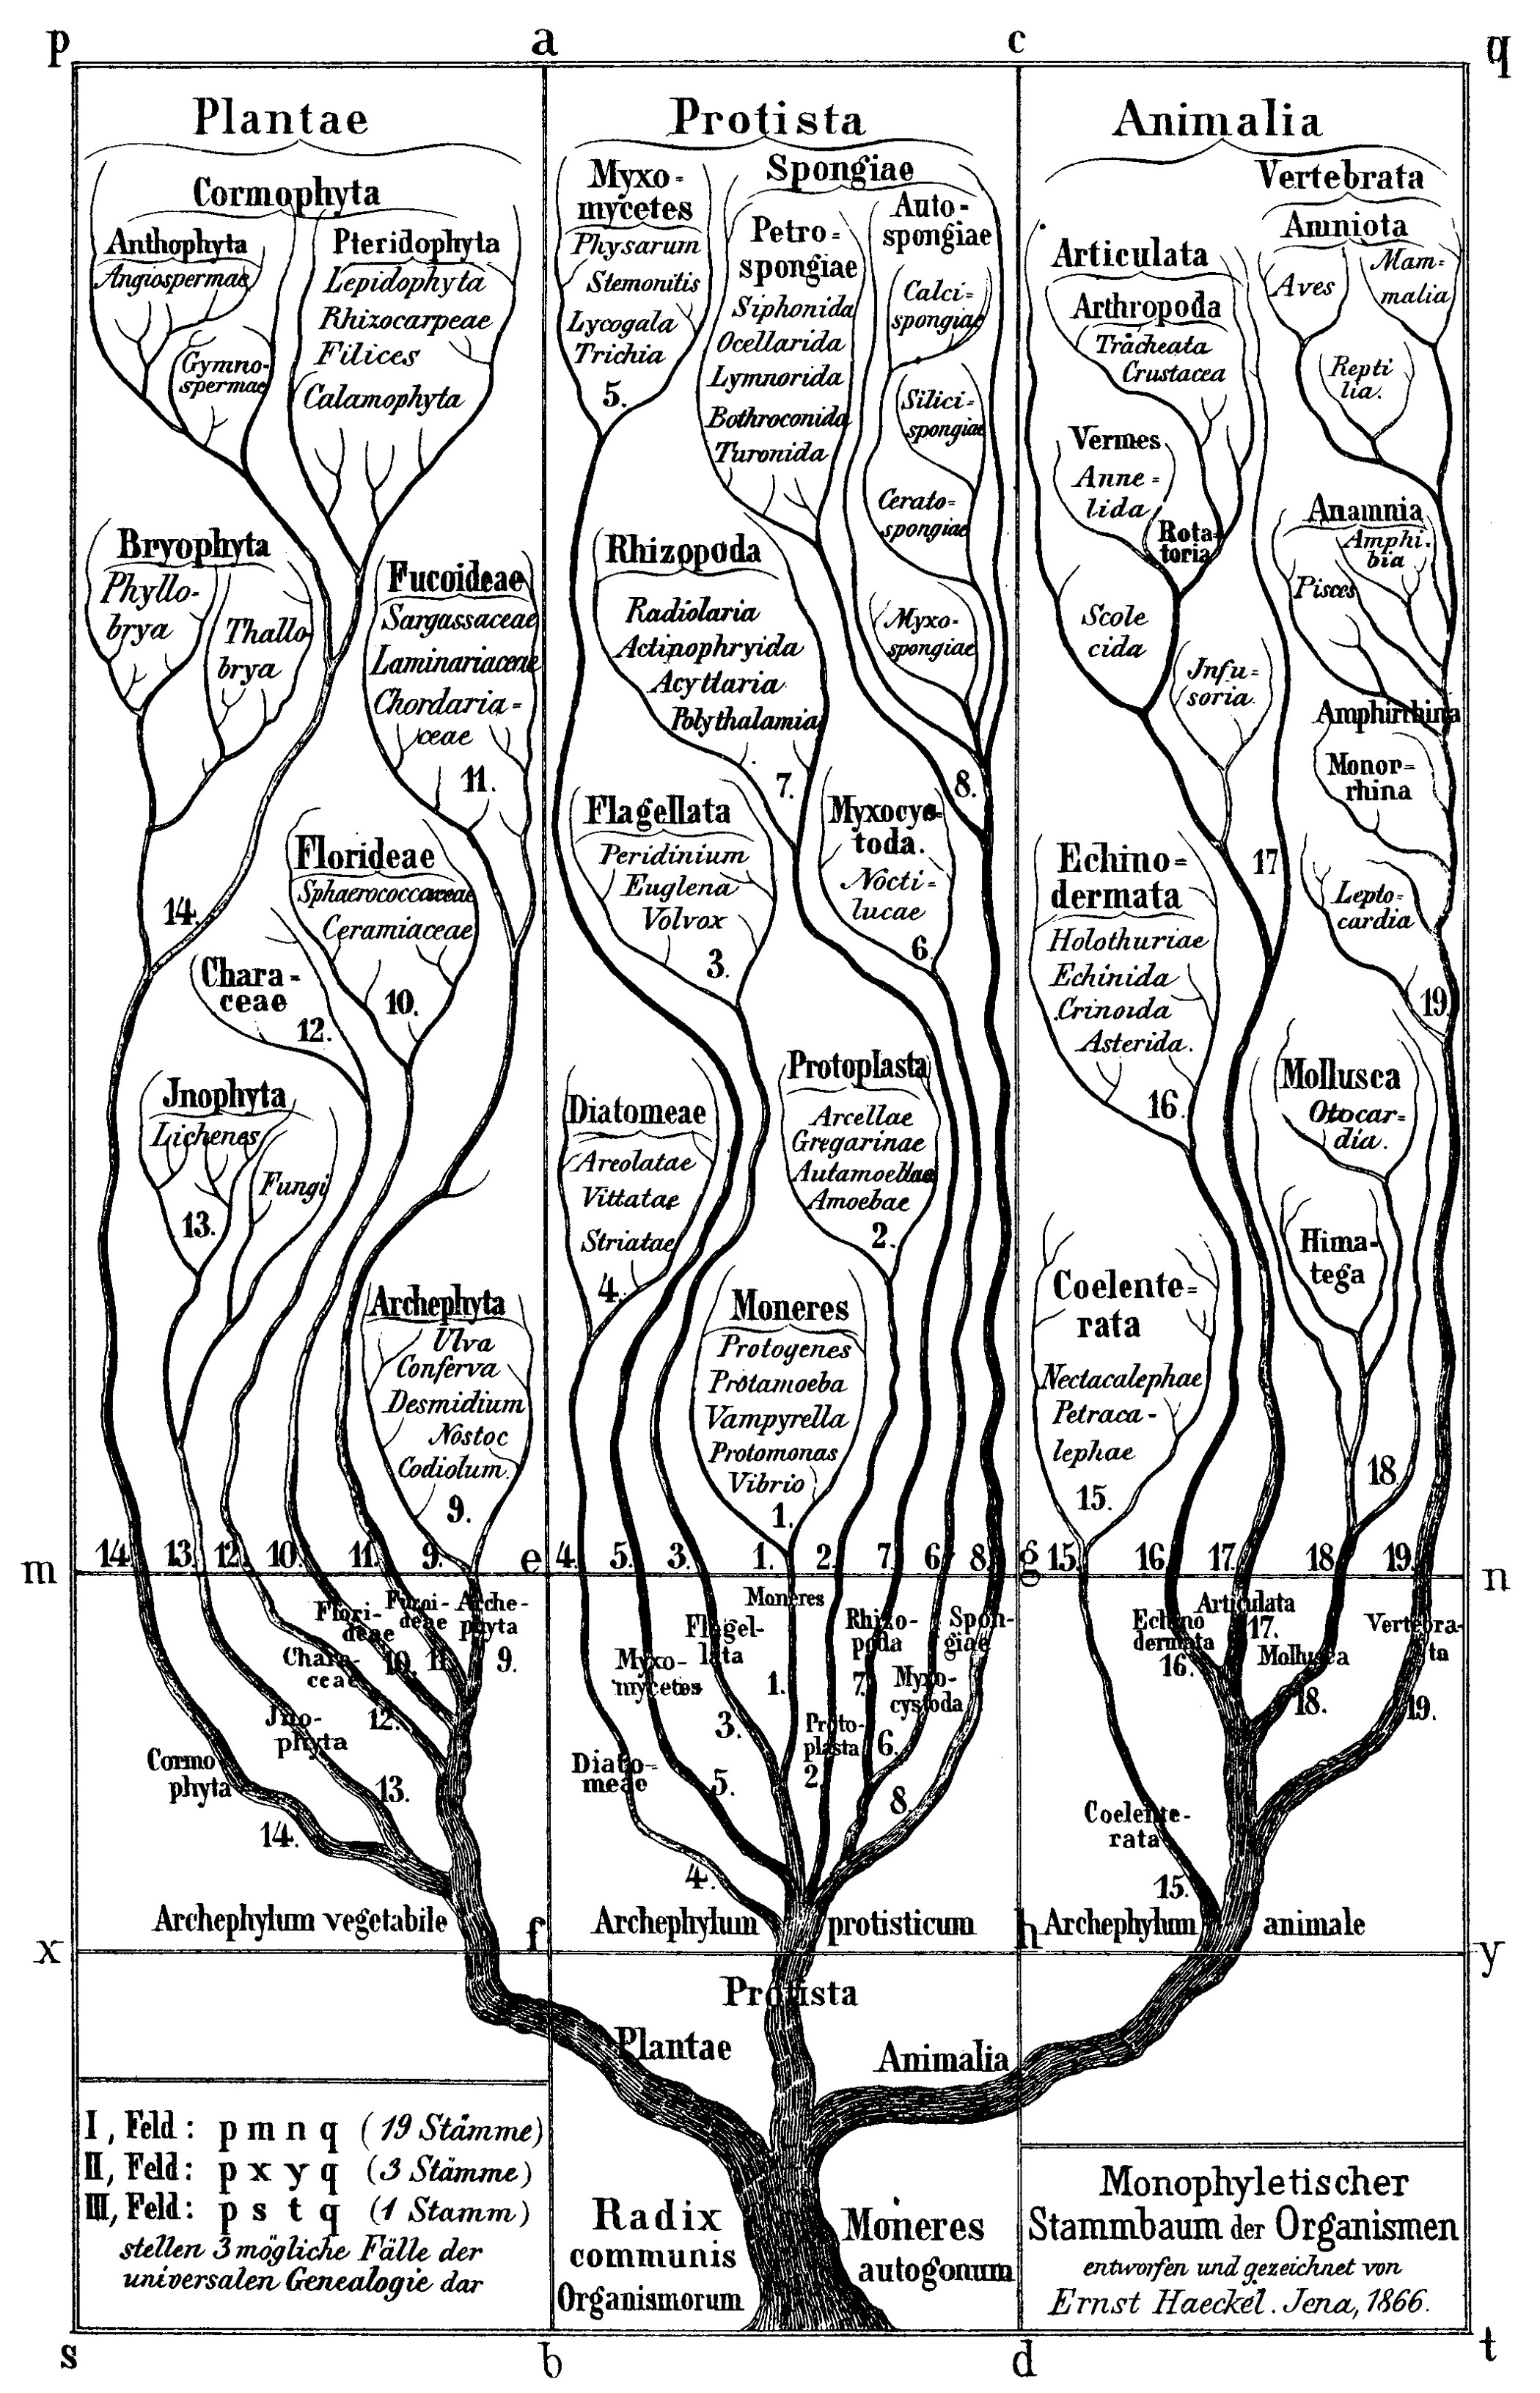 Biology Tree of Life